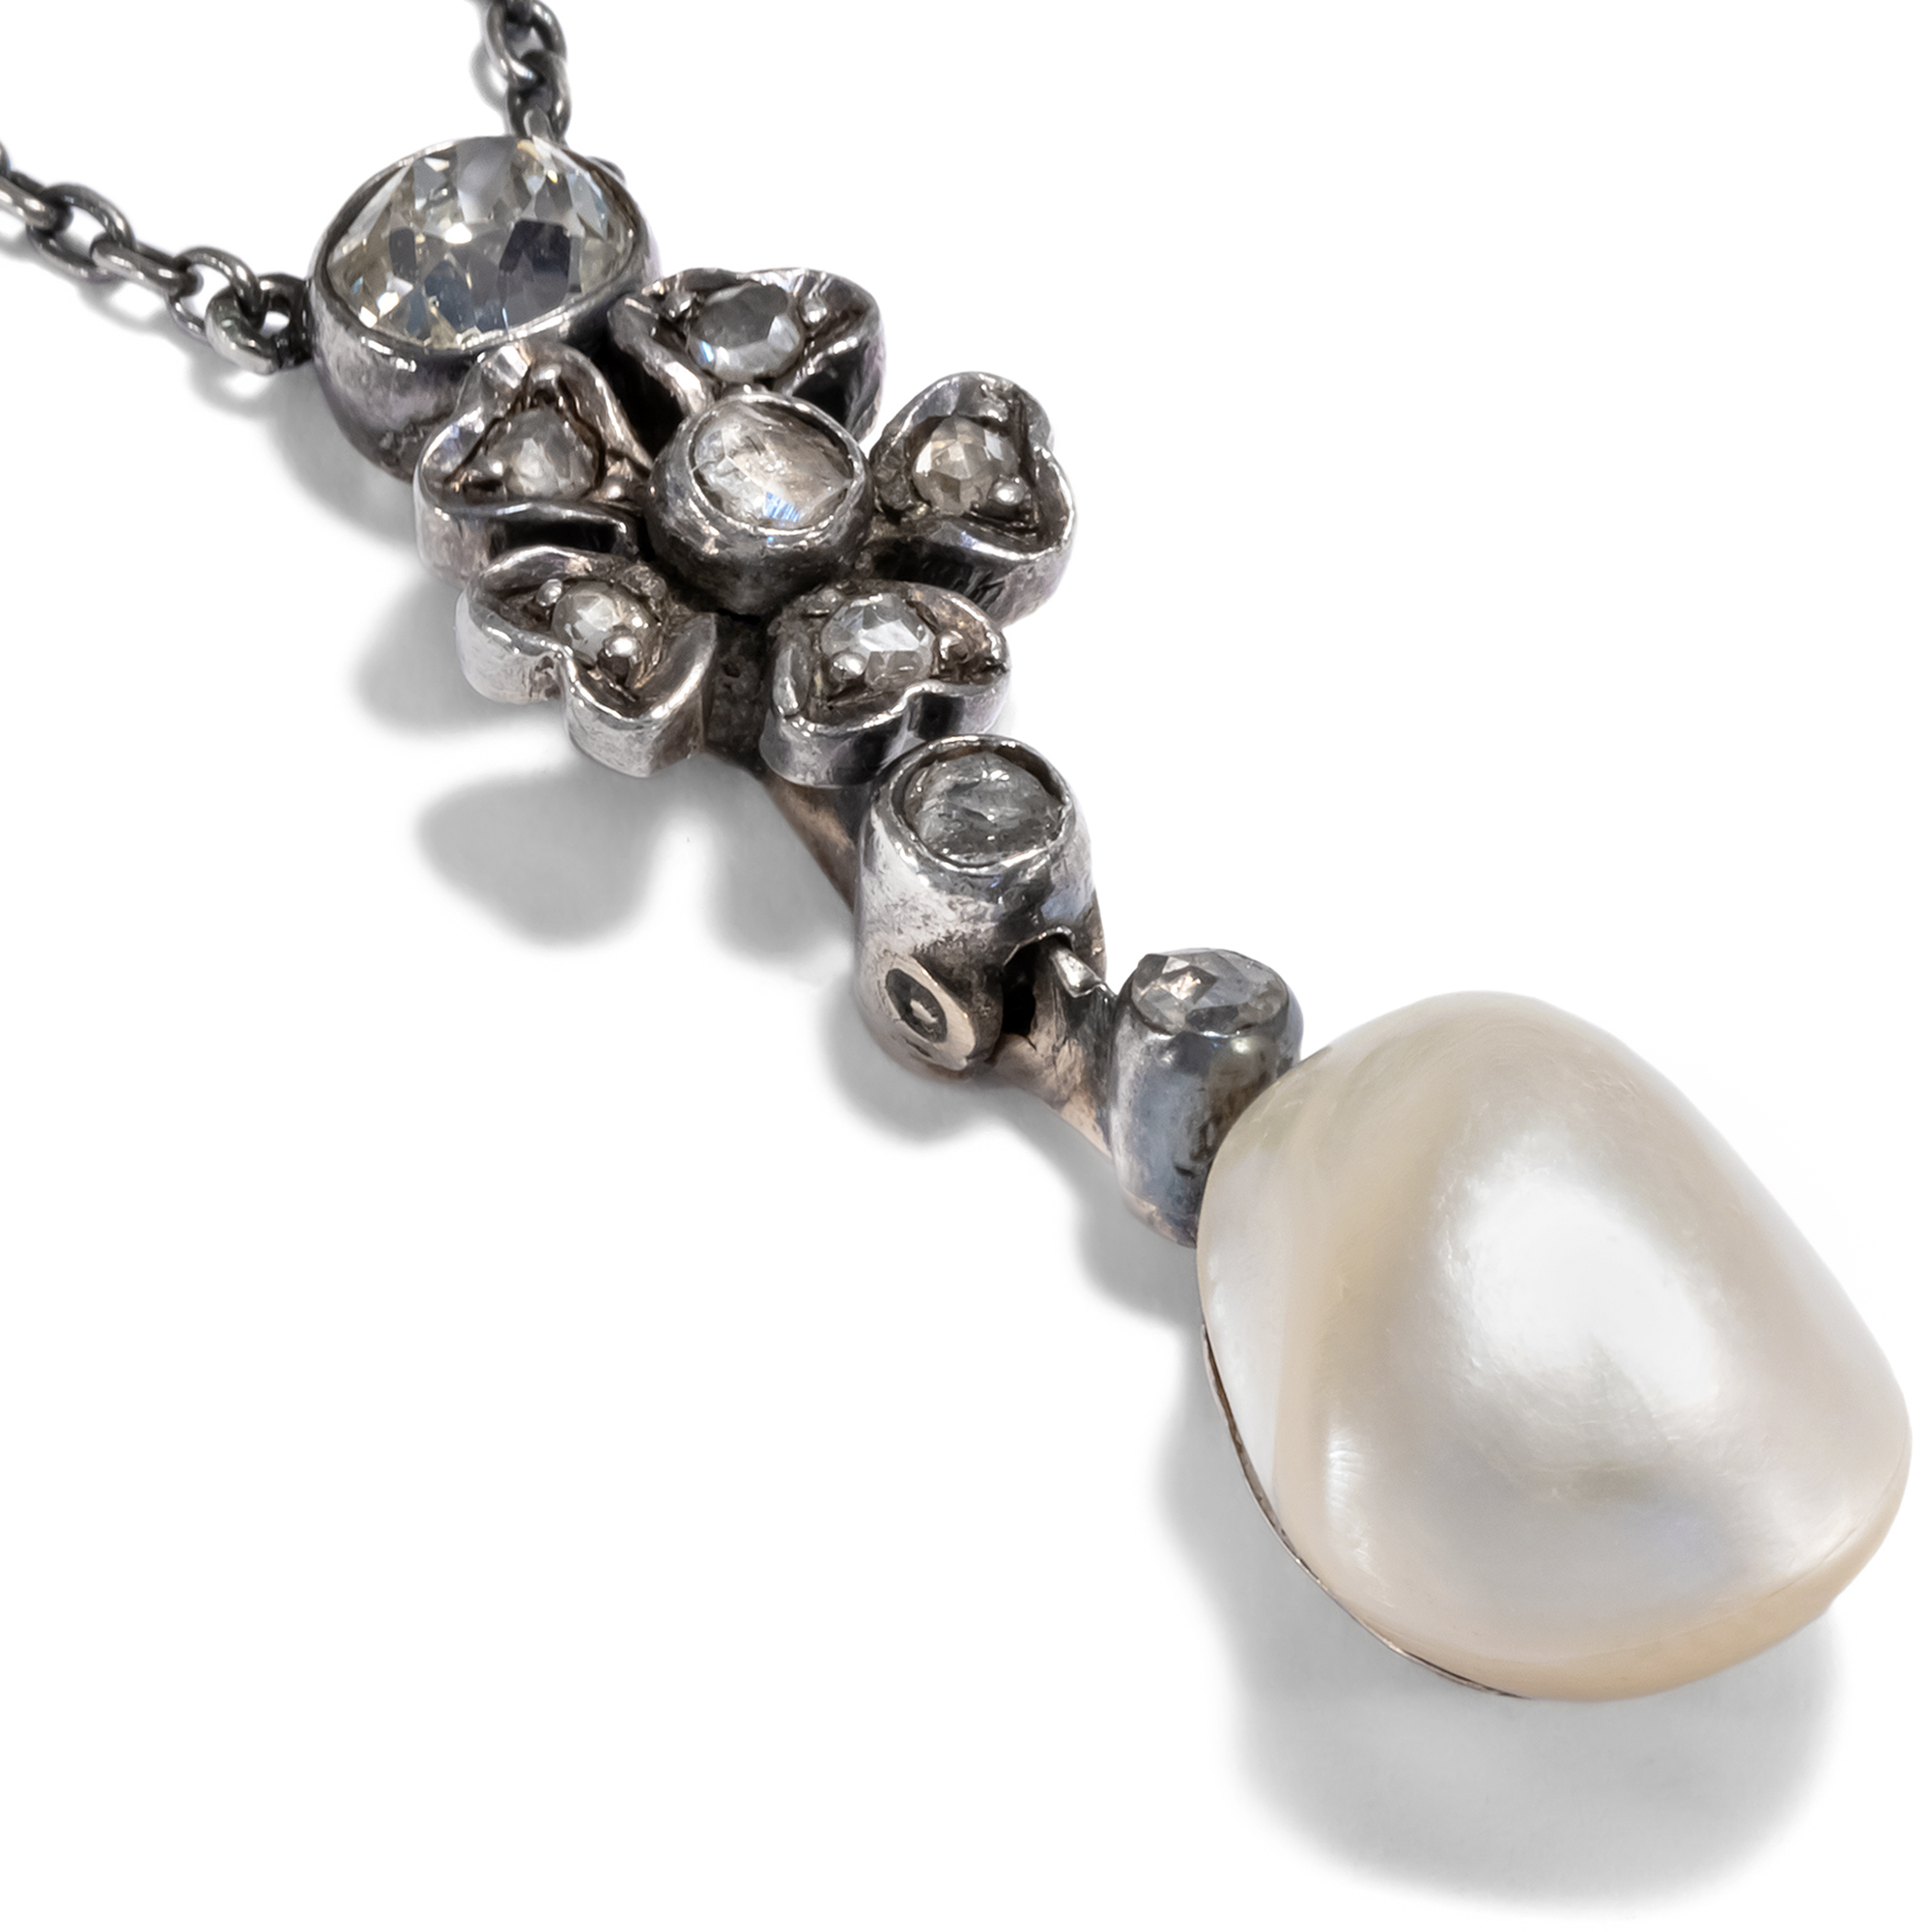 Antique Pendant Necklace with Pearl & Diamonds in Silver & Gold, circa 1900